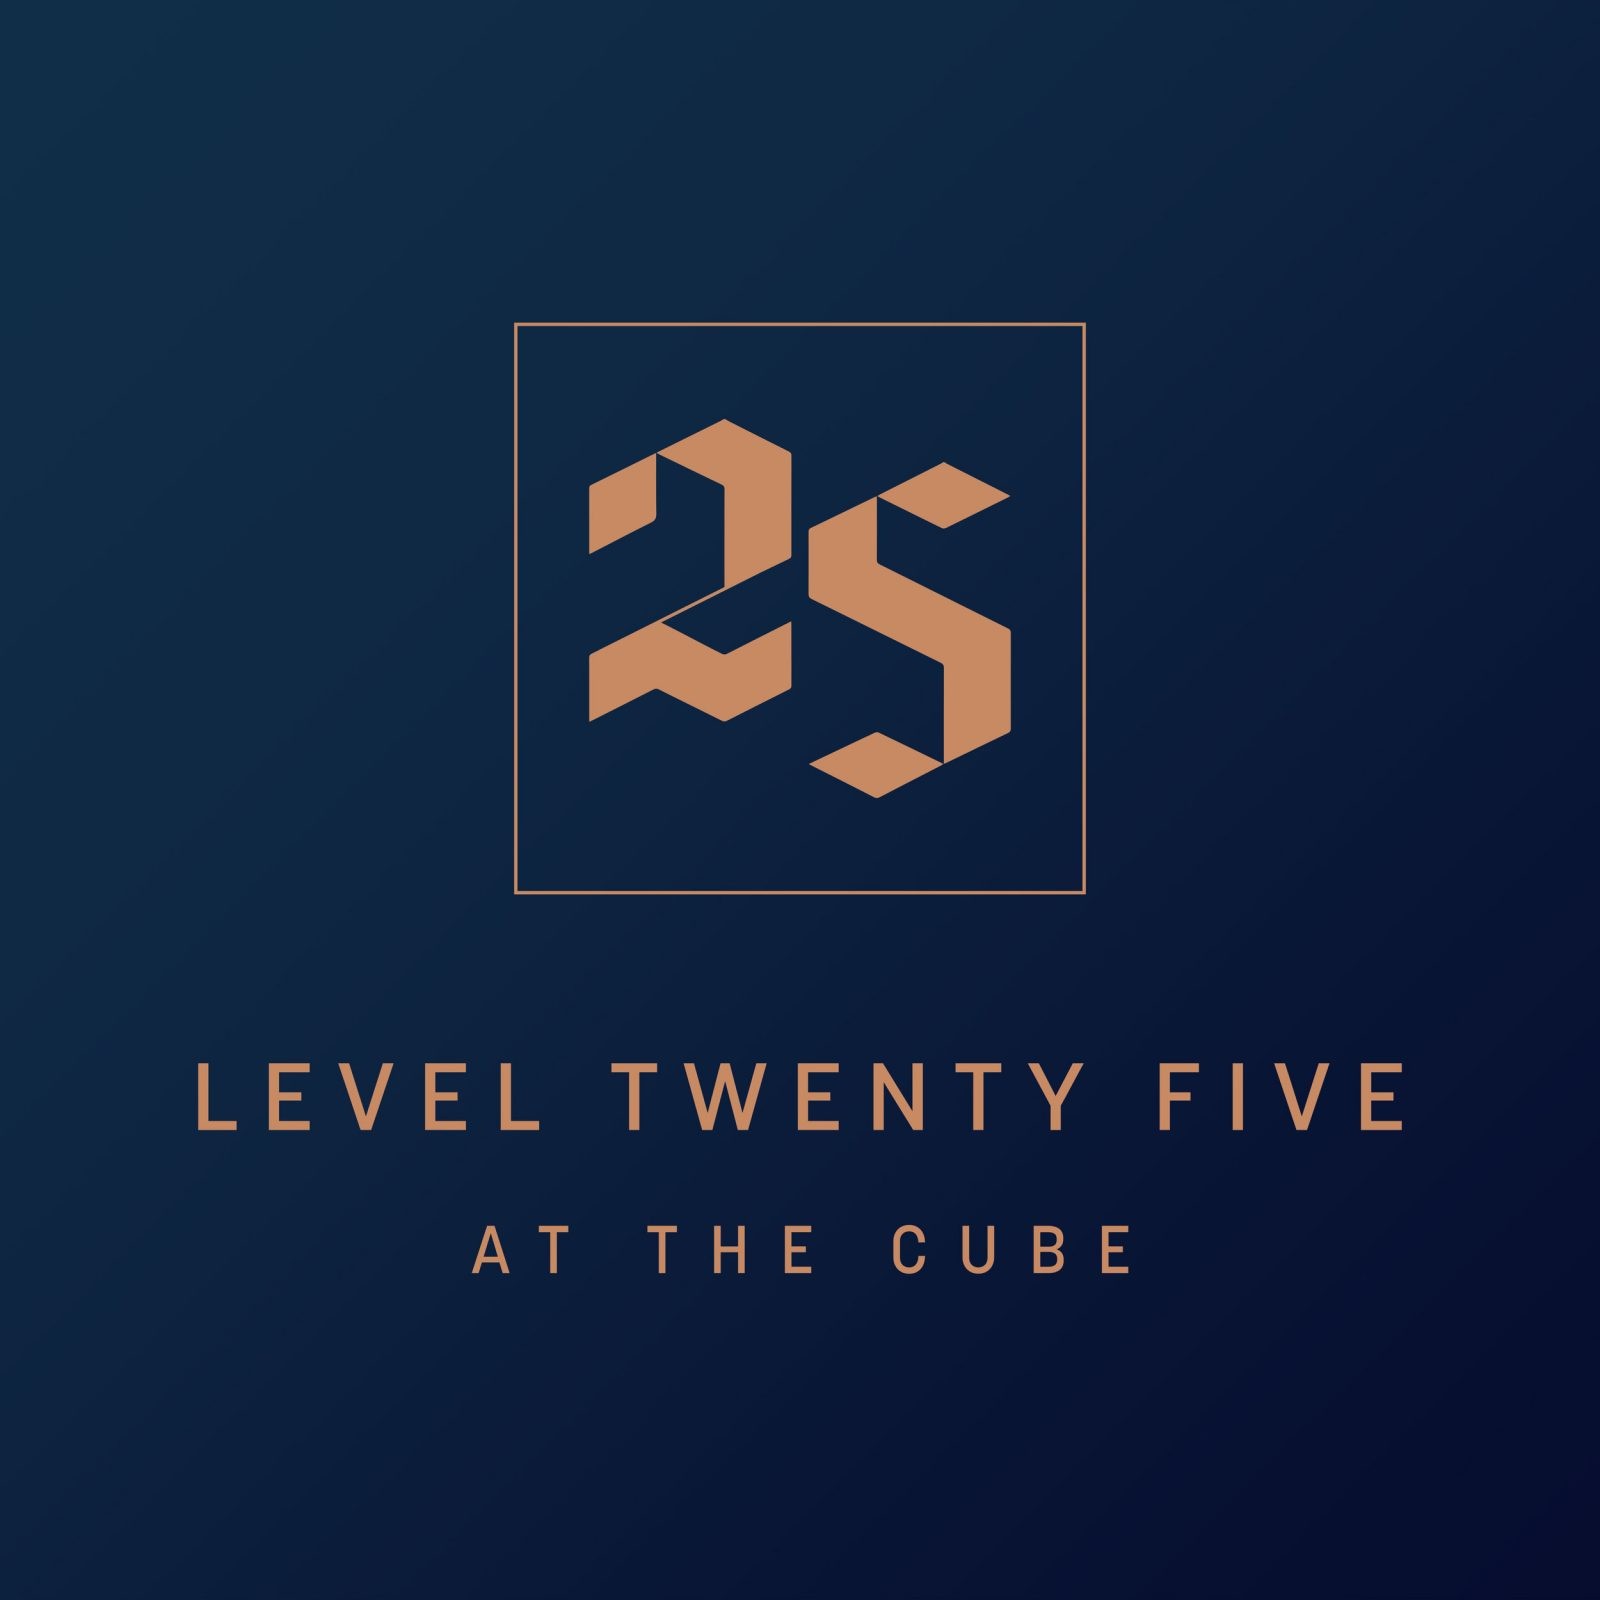 Level Twenty Five Branding by Concept 22